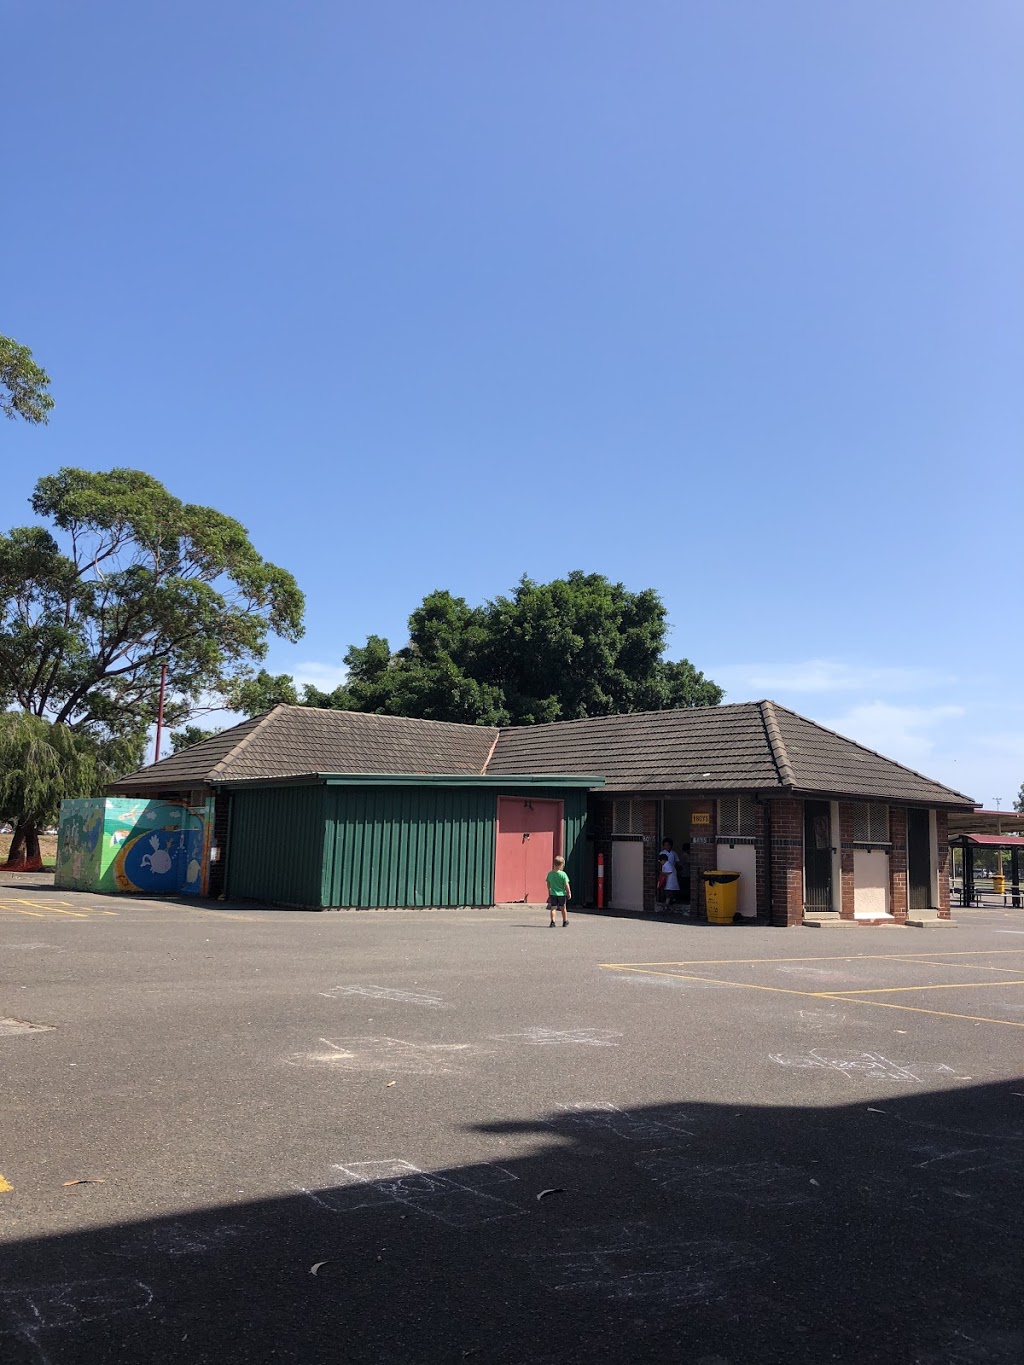 Daceyville Public School | school | Joffre Cres, Daceyville NSW 2032, Australia | 0293491211 OR +61 2 9349 1211